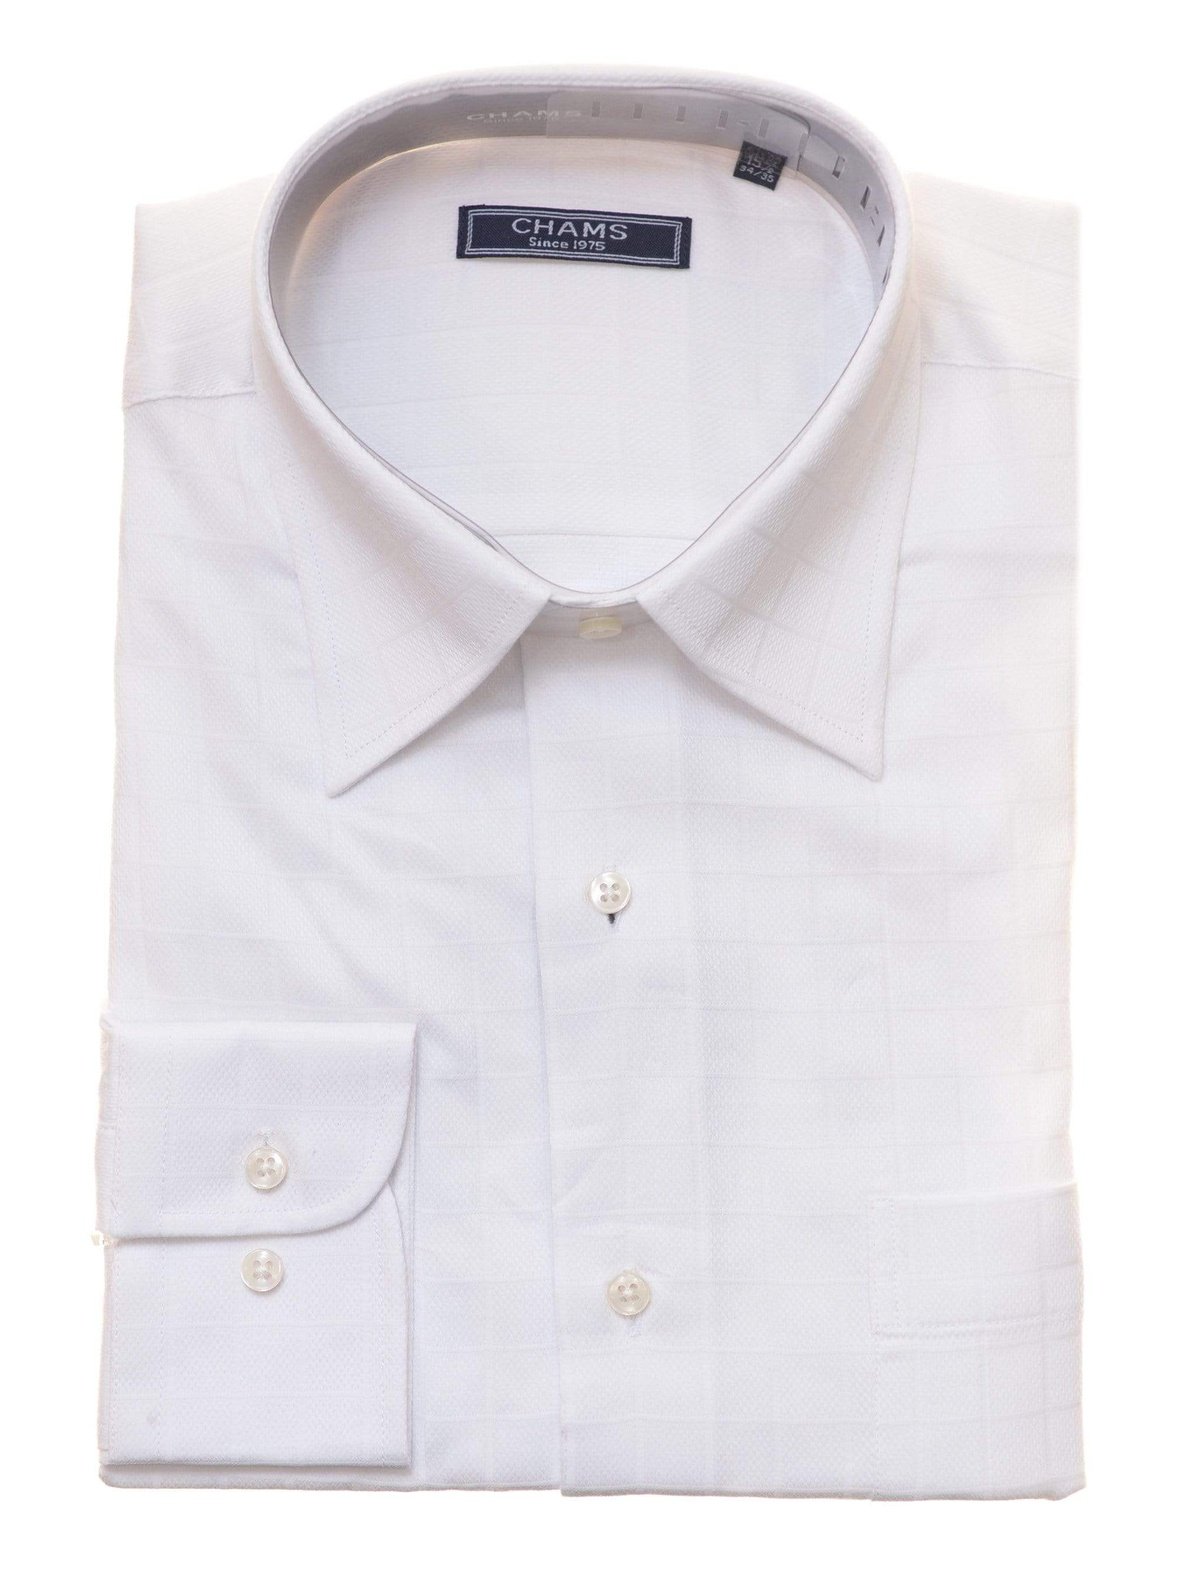 Chams SHIRTS Chams Classic Fit White Tonal Plaid Fine Combed Cotton Dress Shirt